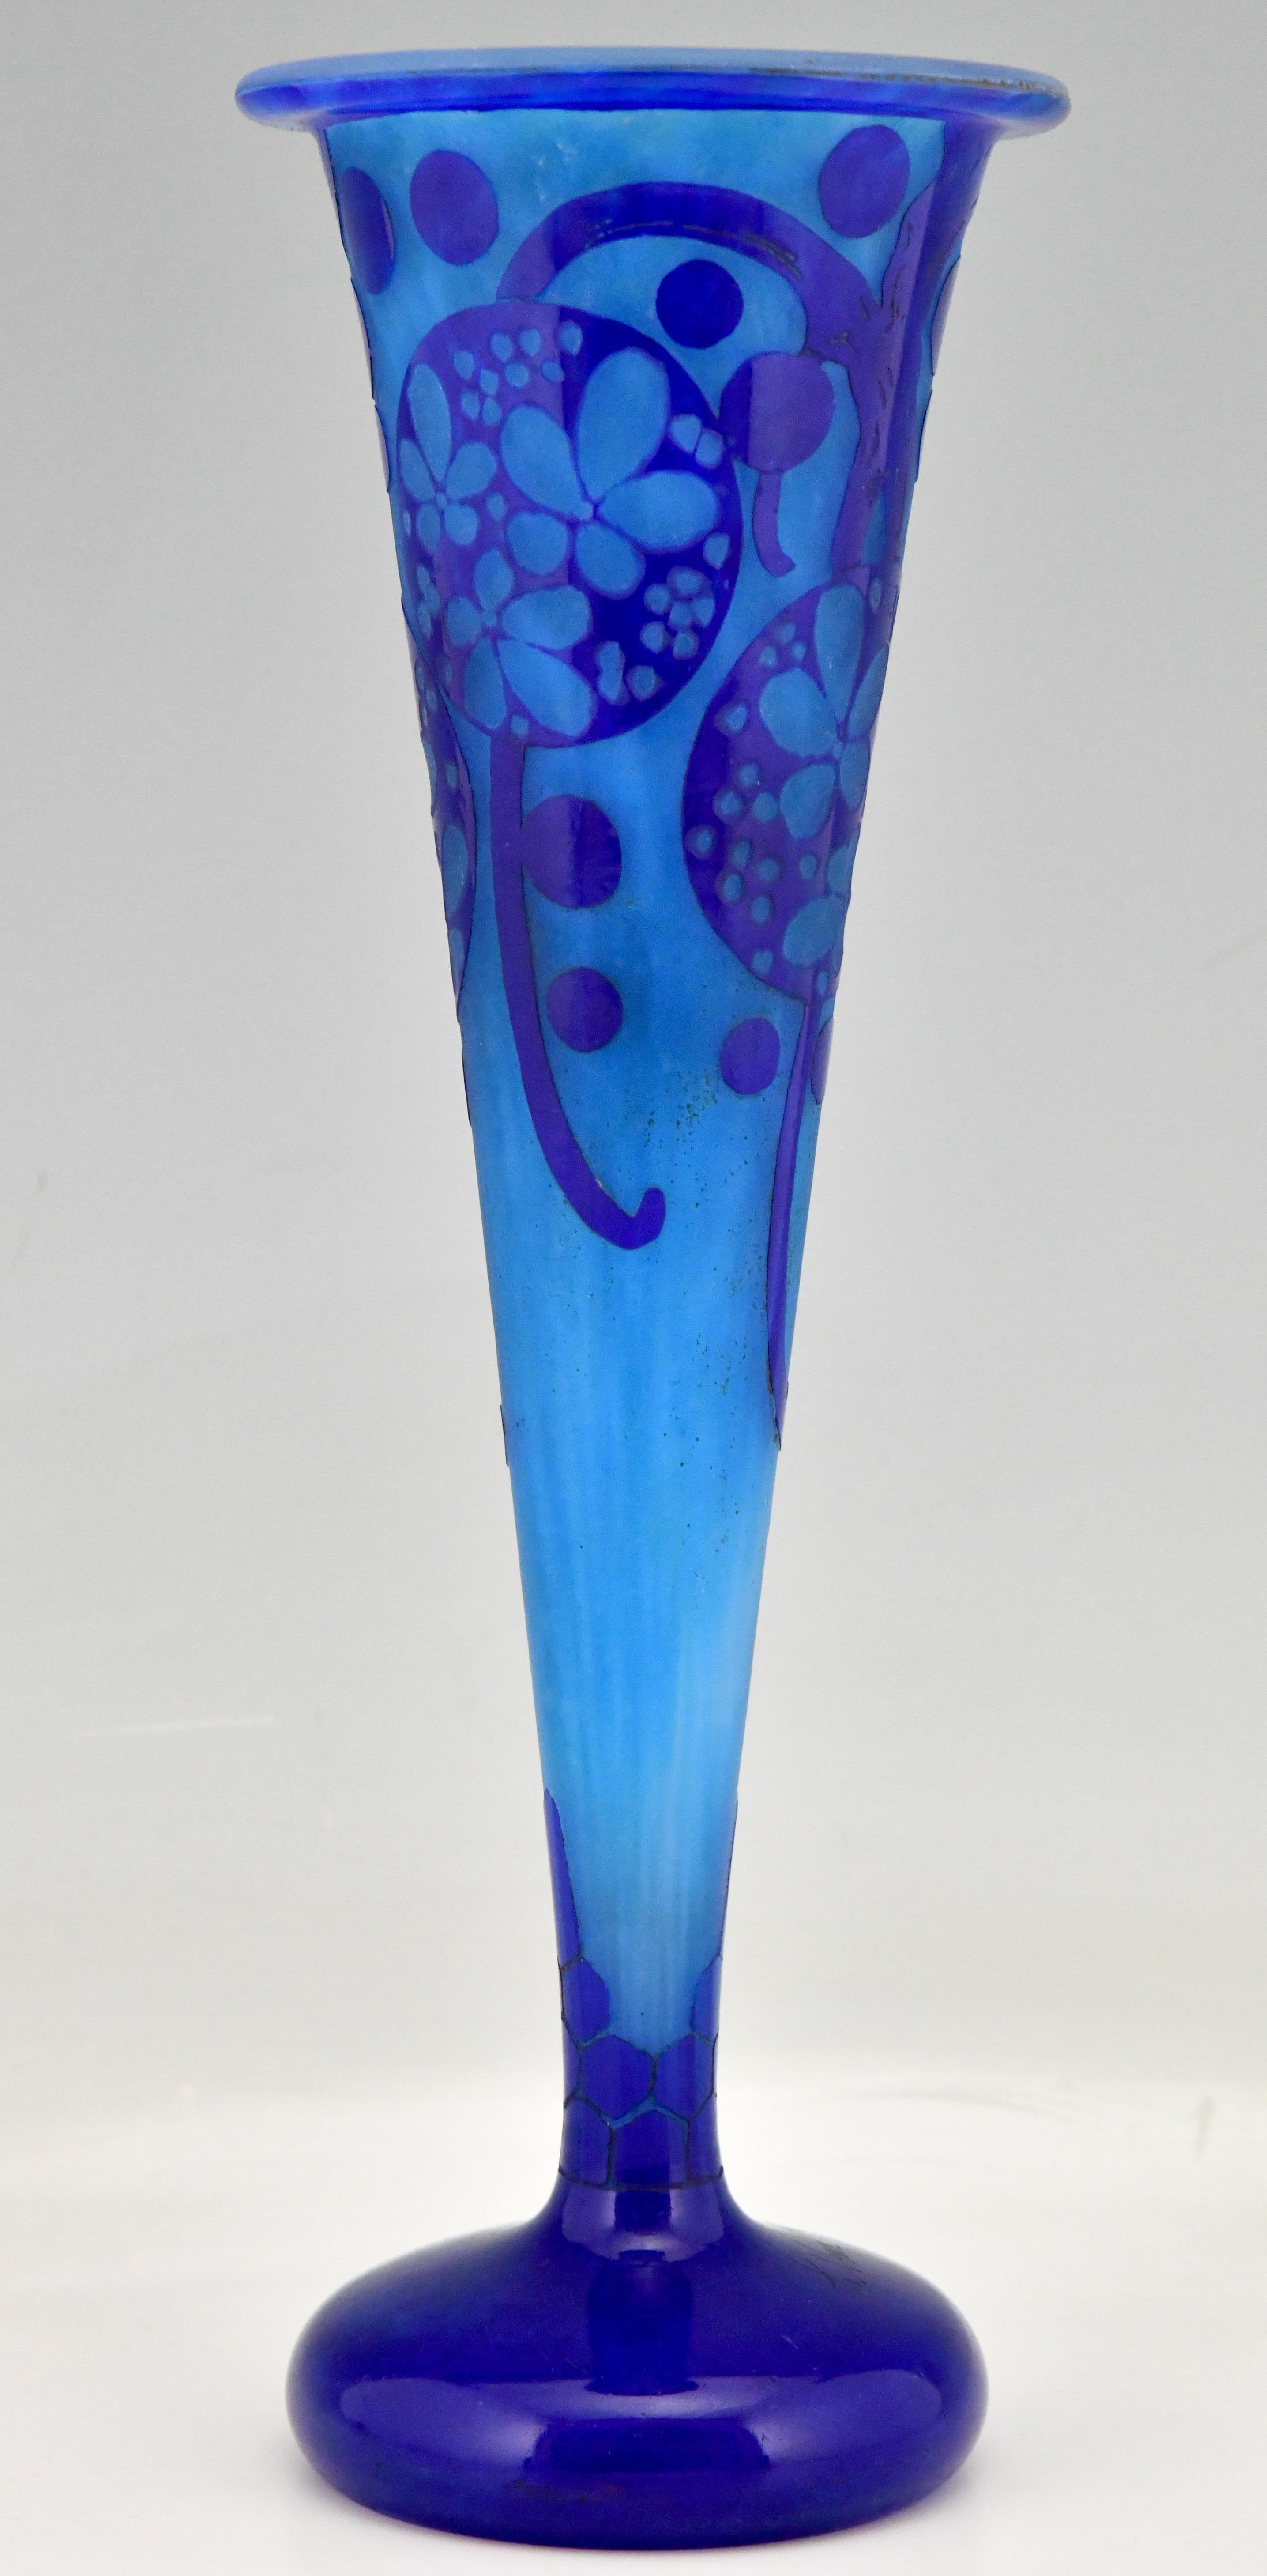 Azurette Art Deco blue Cameo glass vase by Charles Schneider Signed Le Verre Français. France 1924-1925 Light and dark blue colors.
The same design is illustrated in Charles Schneider-Le Verre Français By Marie Christine Joulin, Gerold Maier, &